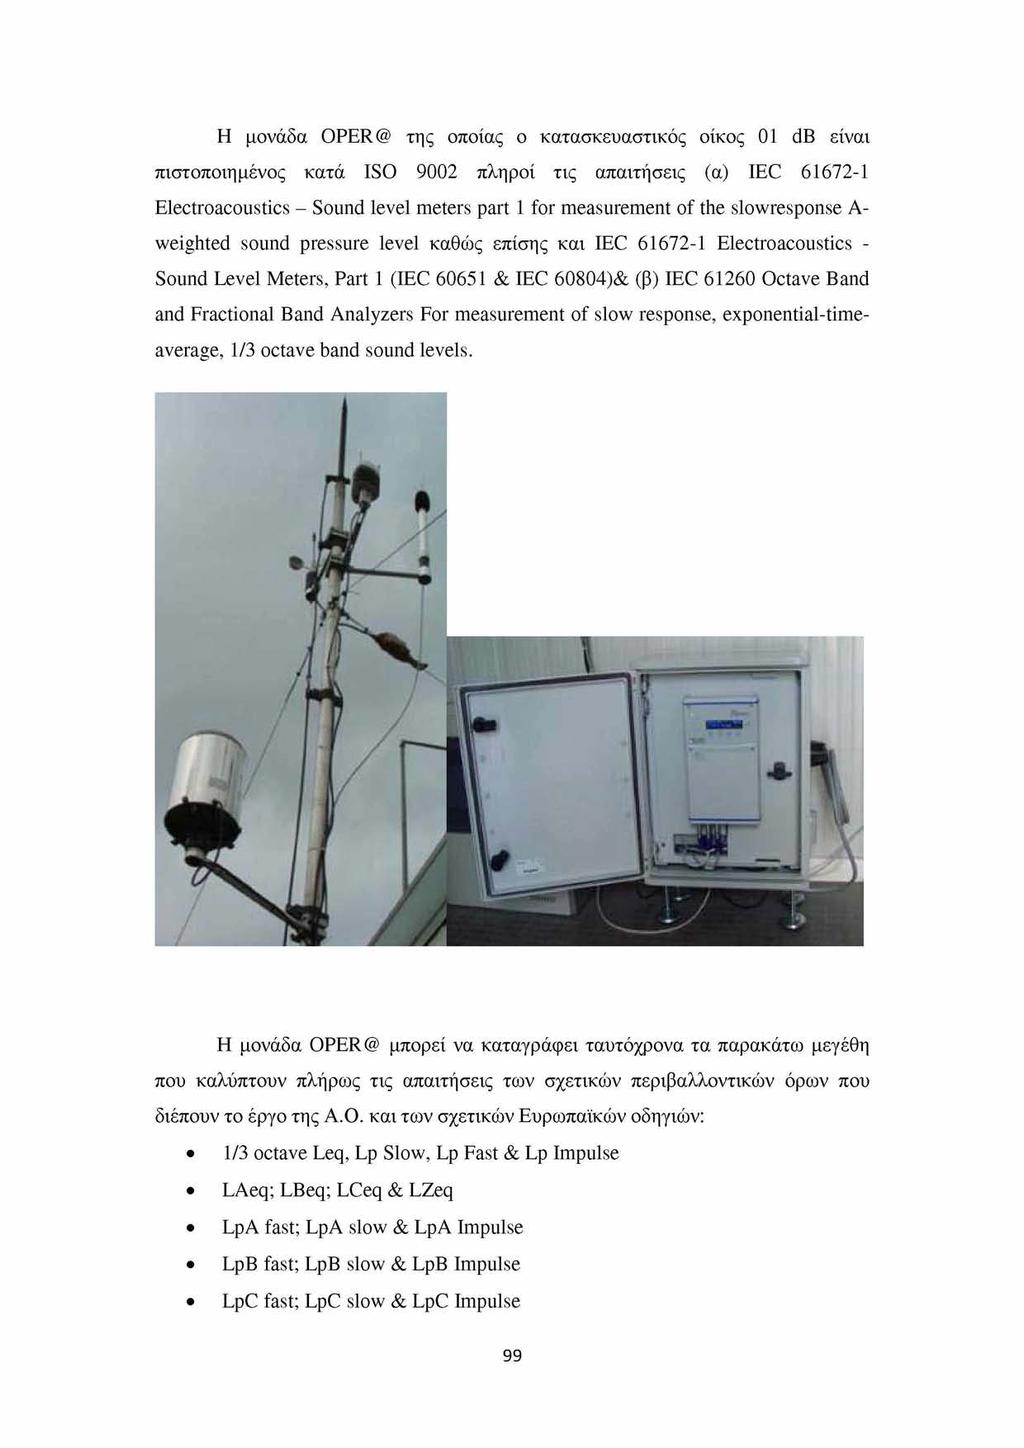 H μονάδα OPER@ της οποίας ο κατασκευαστικός οίκος 01 db είναι πιστοποιημένος κατά ISO 9002 πληροί τις απαιτήσεις (α) IEC 61672-1 Electroacoustics - Sound level meters part 1 for measurement of the